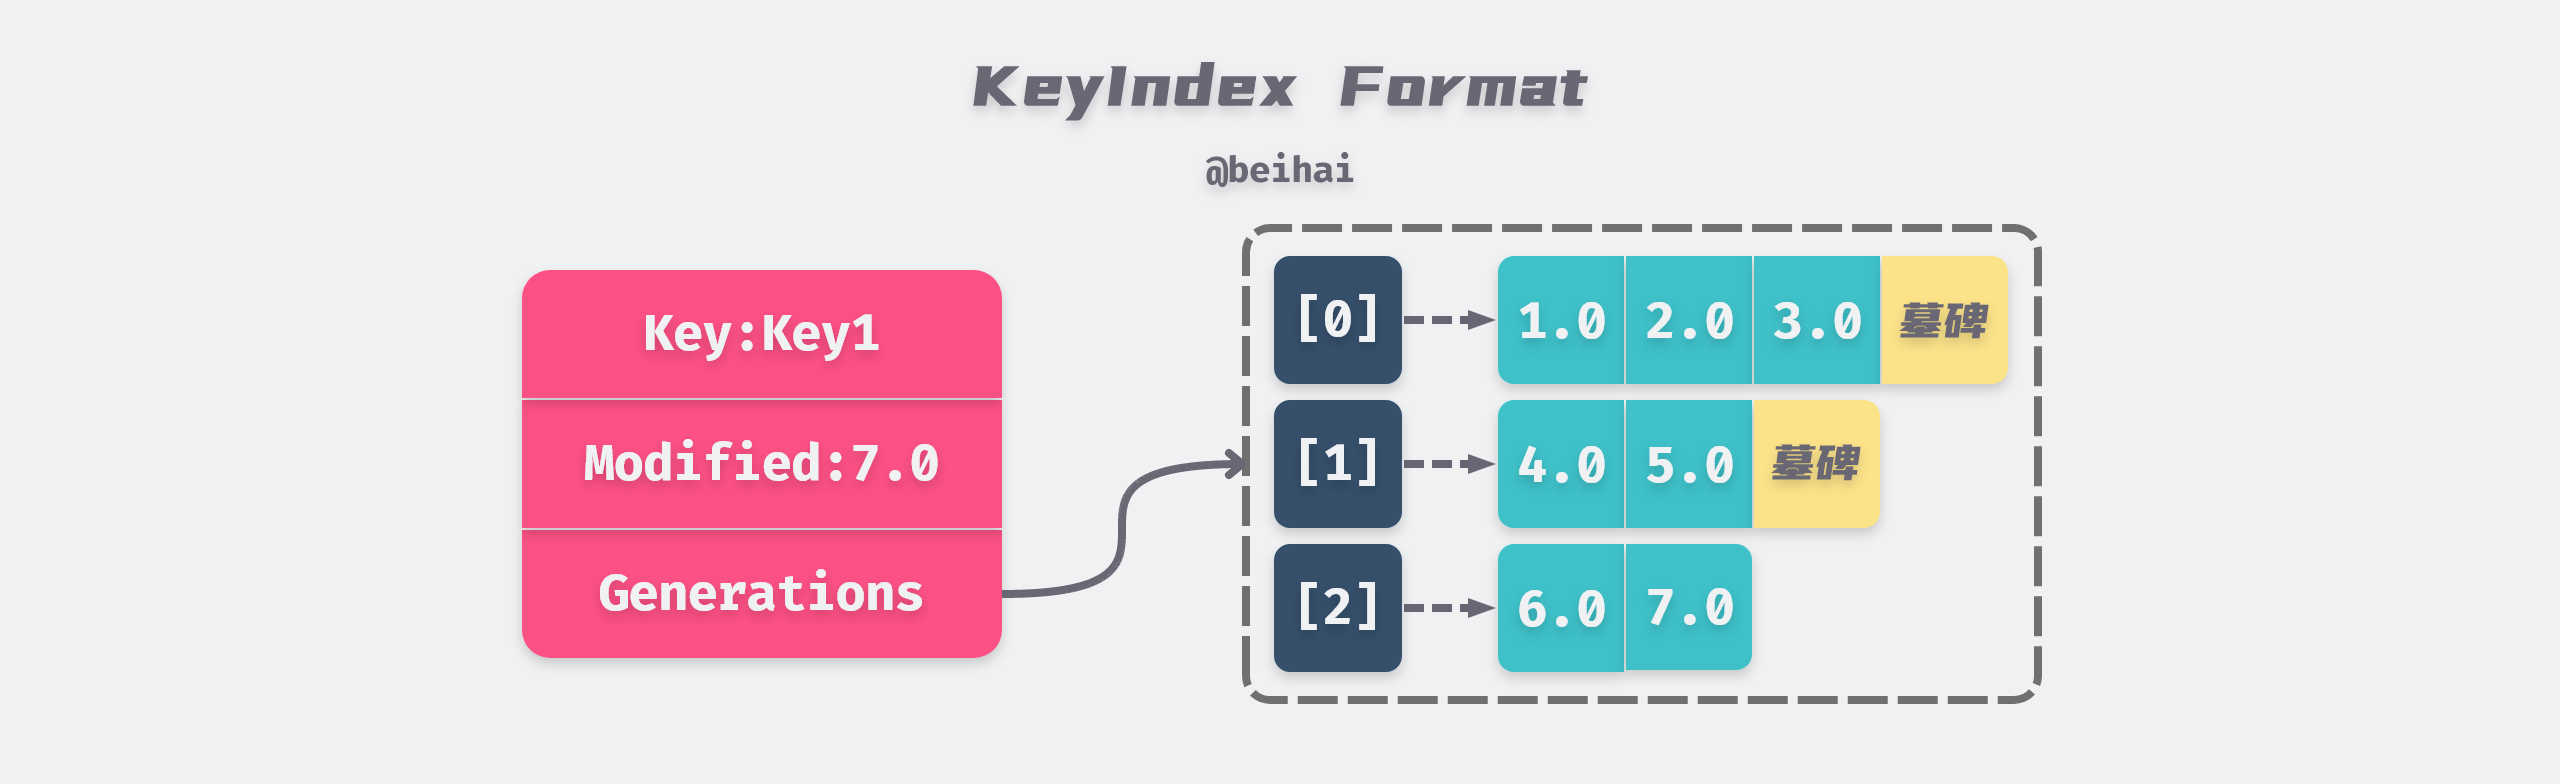 Keyindex format